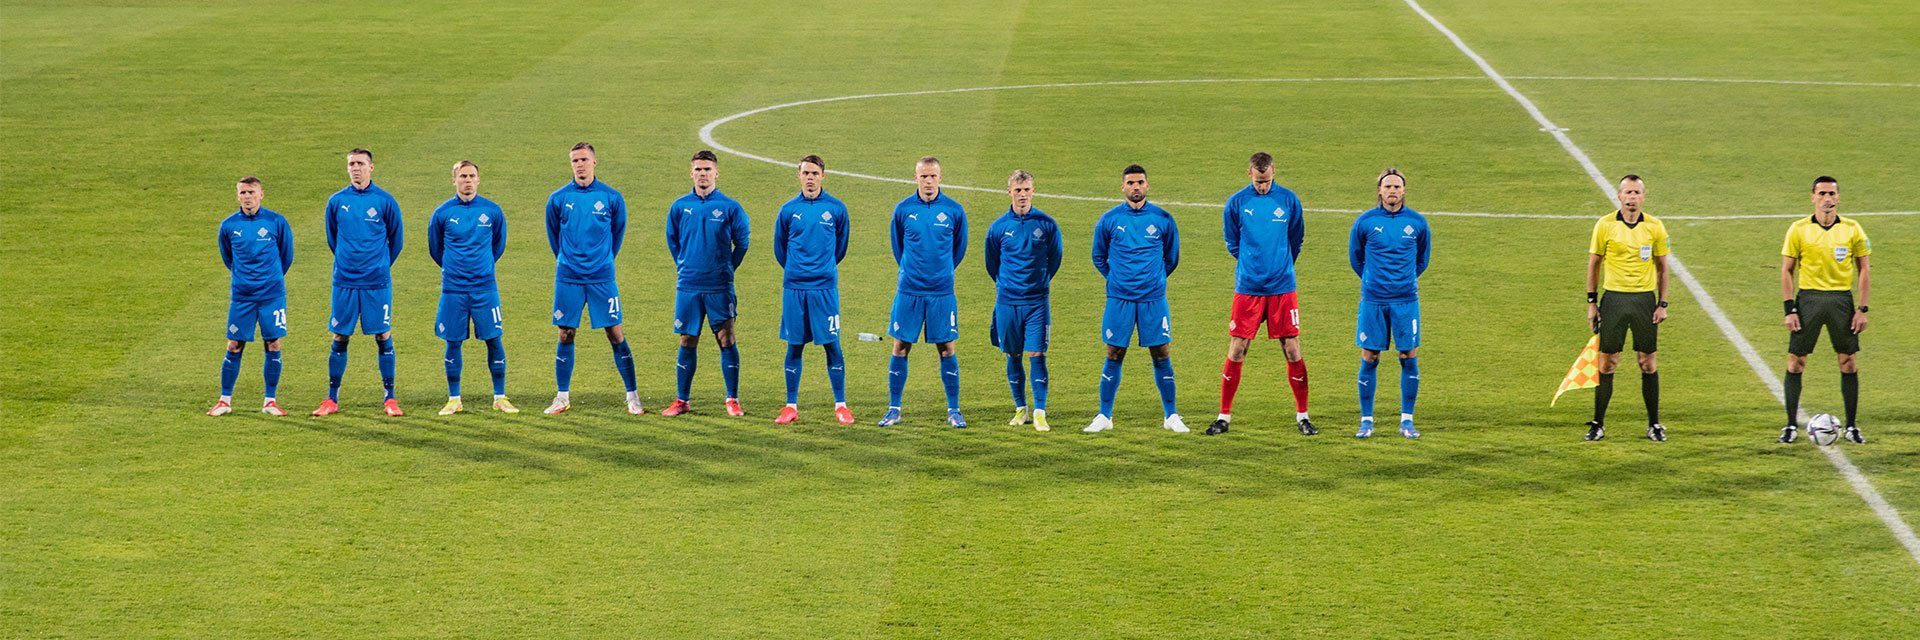 2021_Futbol_Iceland_02.jpg